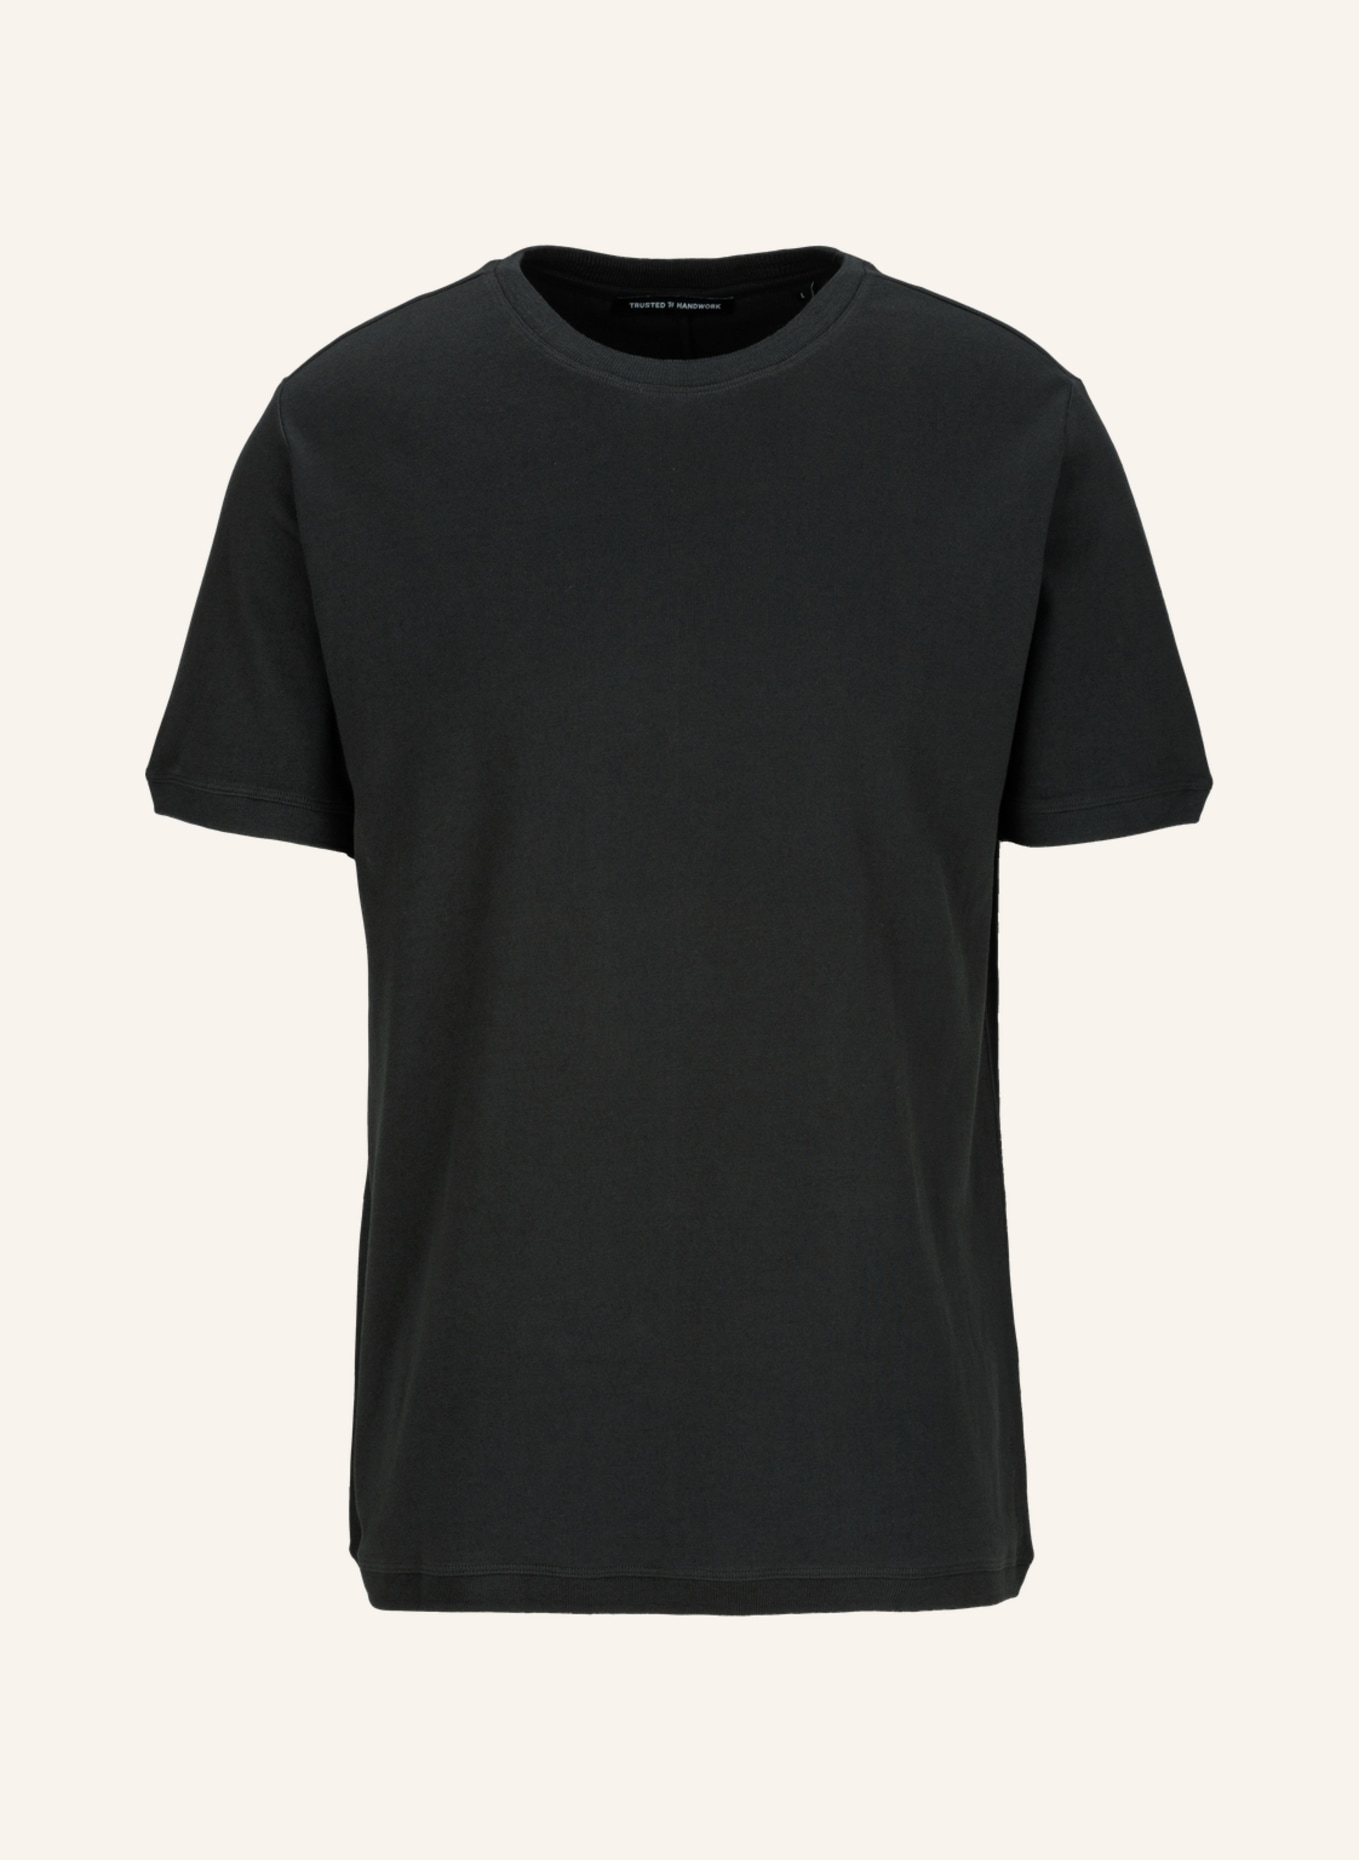 TRUSTED HANDWORK T-Shirt SAN DIEGO, Farbe: DUNKELGRAU (Bild 1)